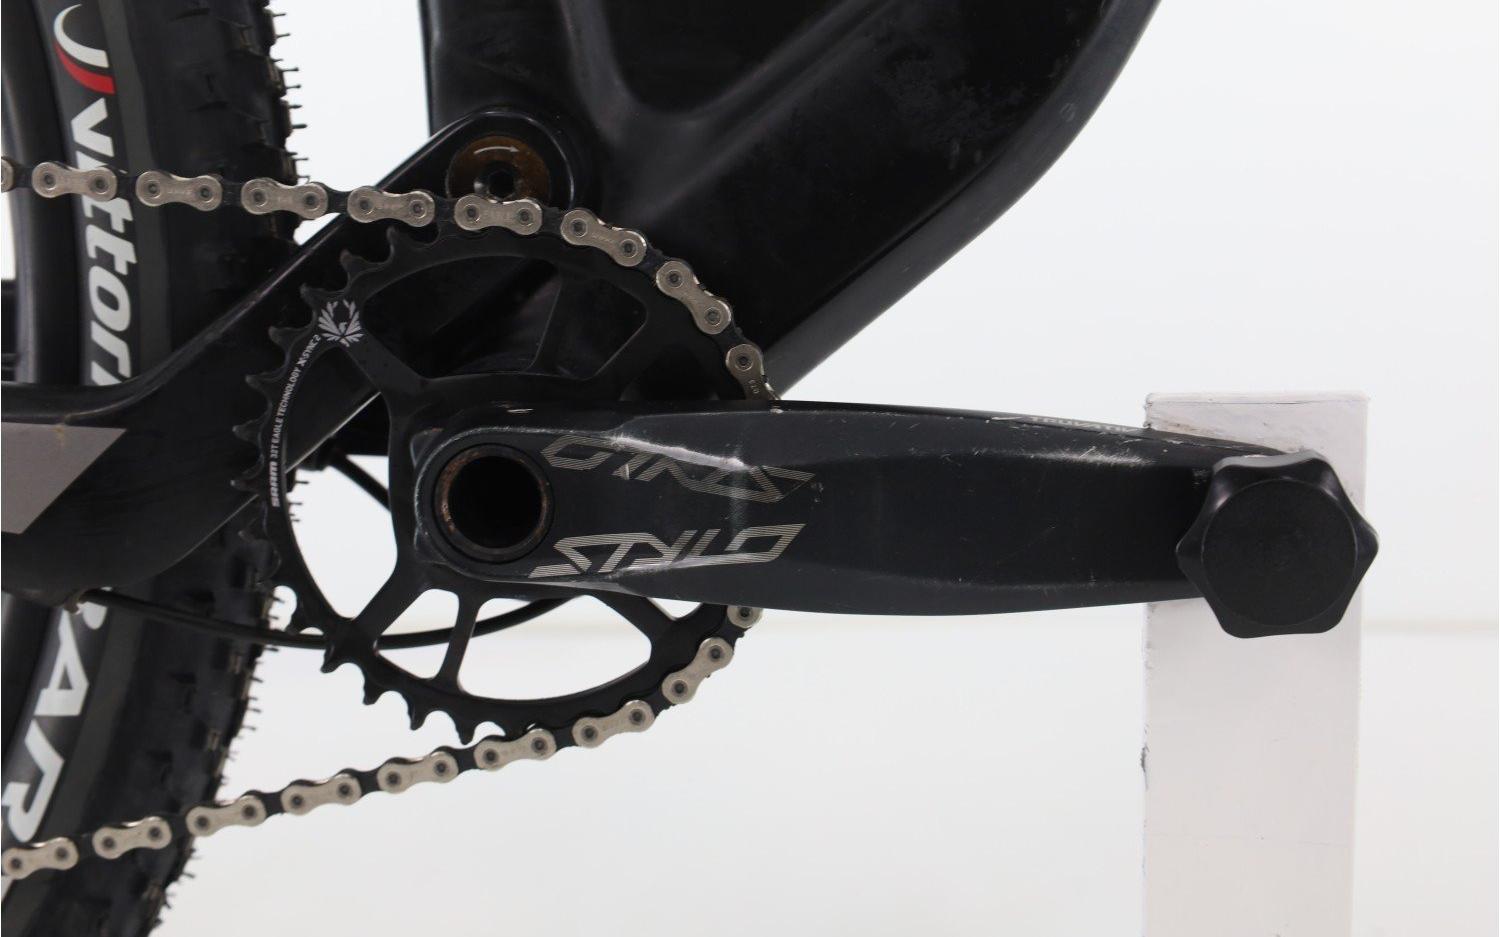 Mountain Bike Megamo Zyclora ·  Track 05 carbonio GX, Usata, 2019, Barcelona